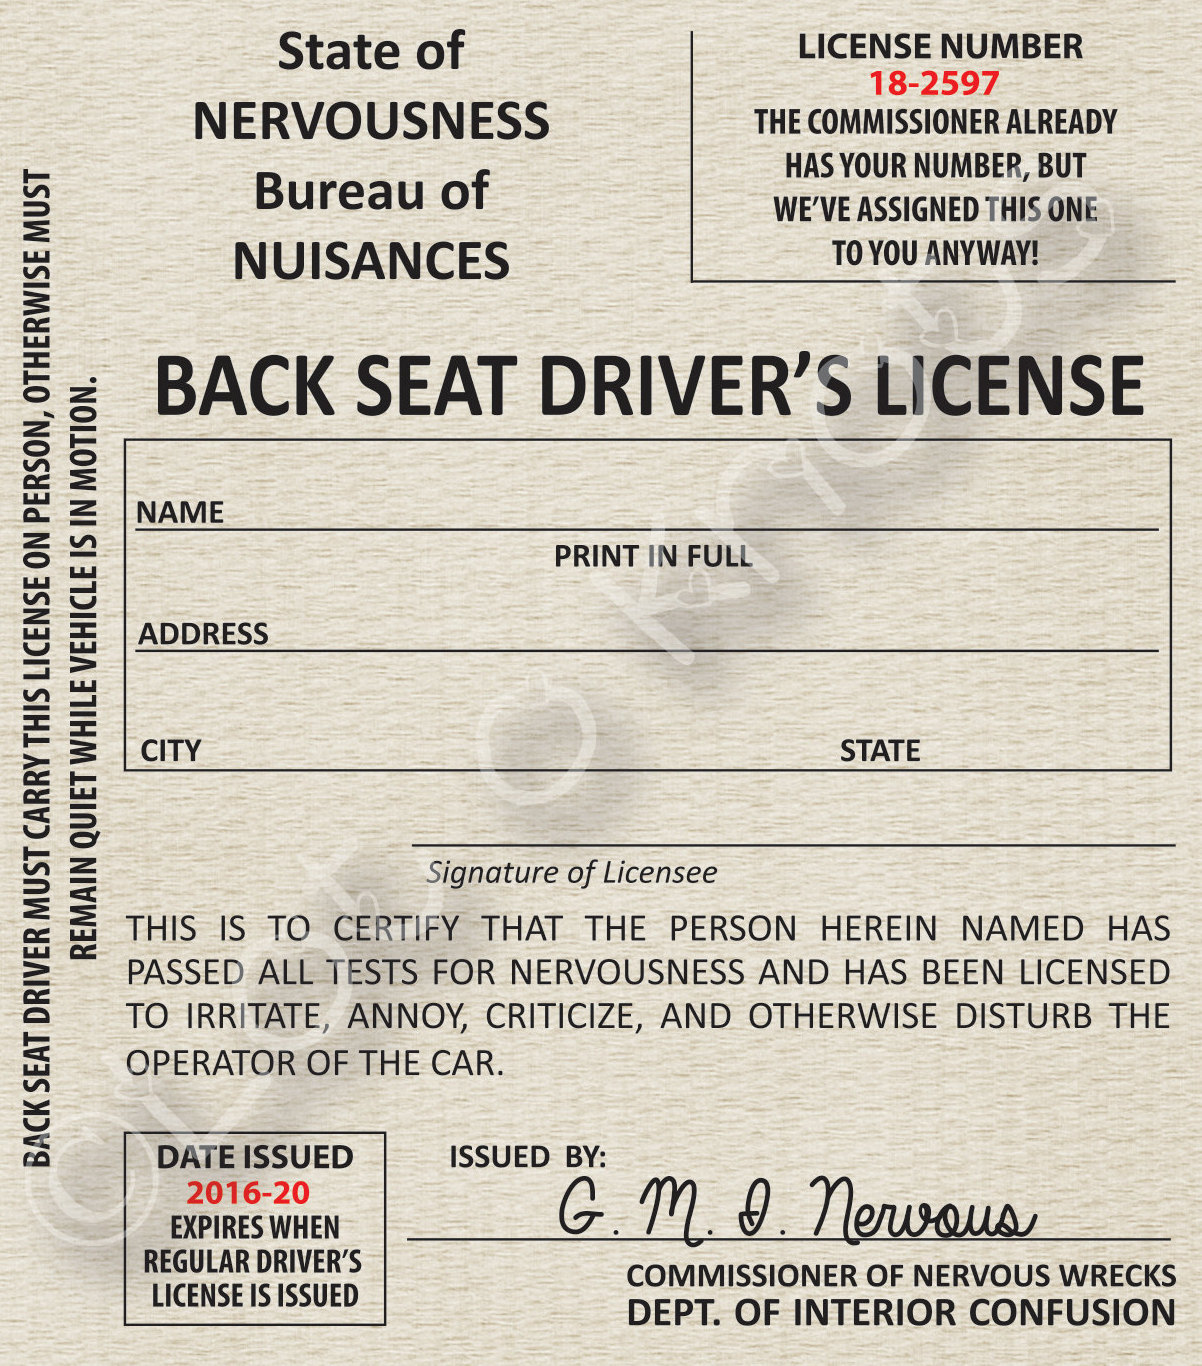 BACKSEAT DRIVER'S LICENSE Digital File to Print